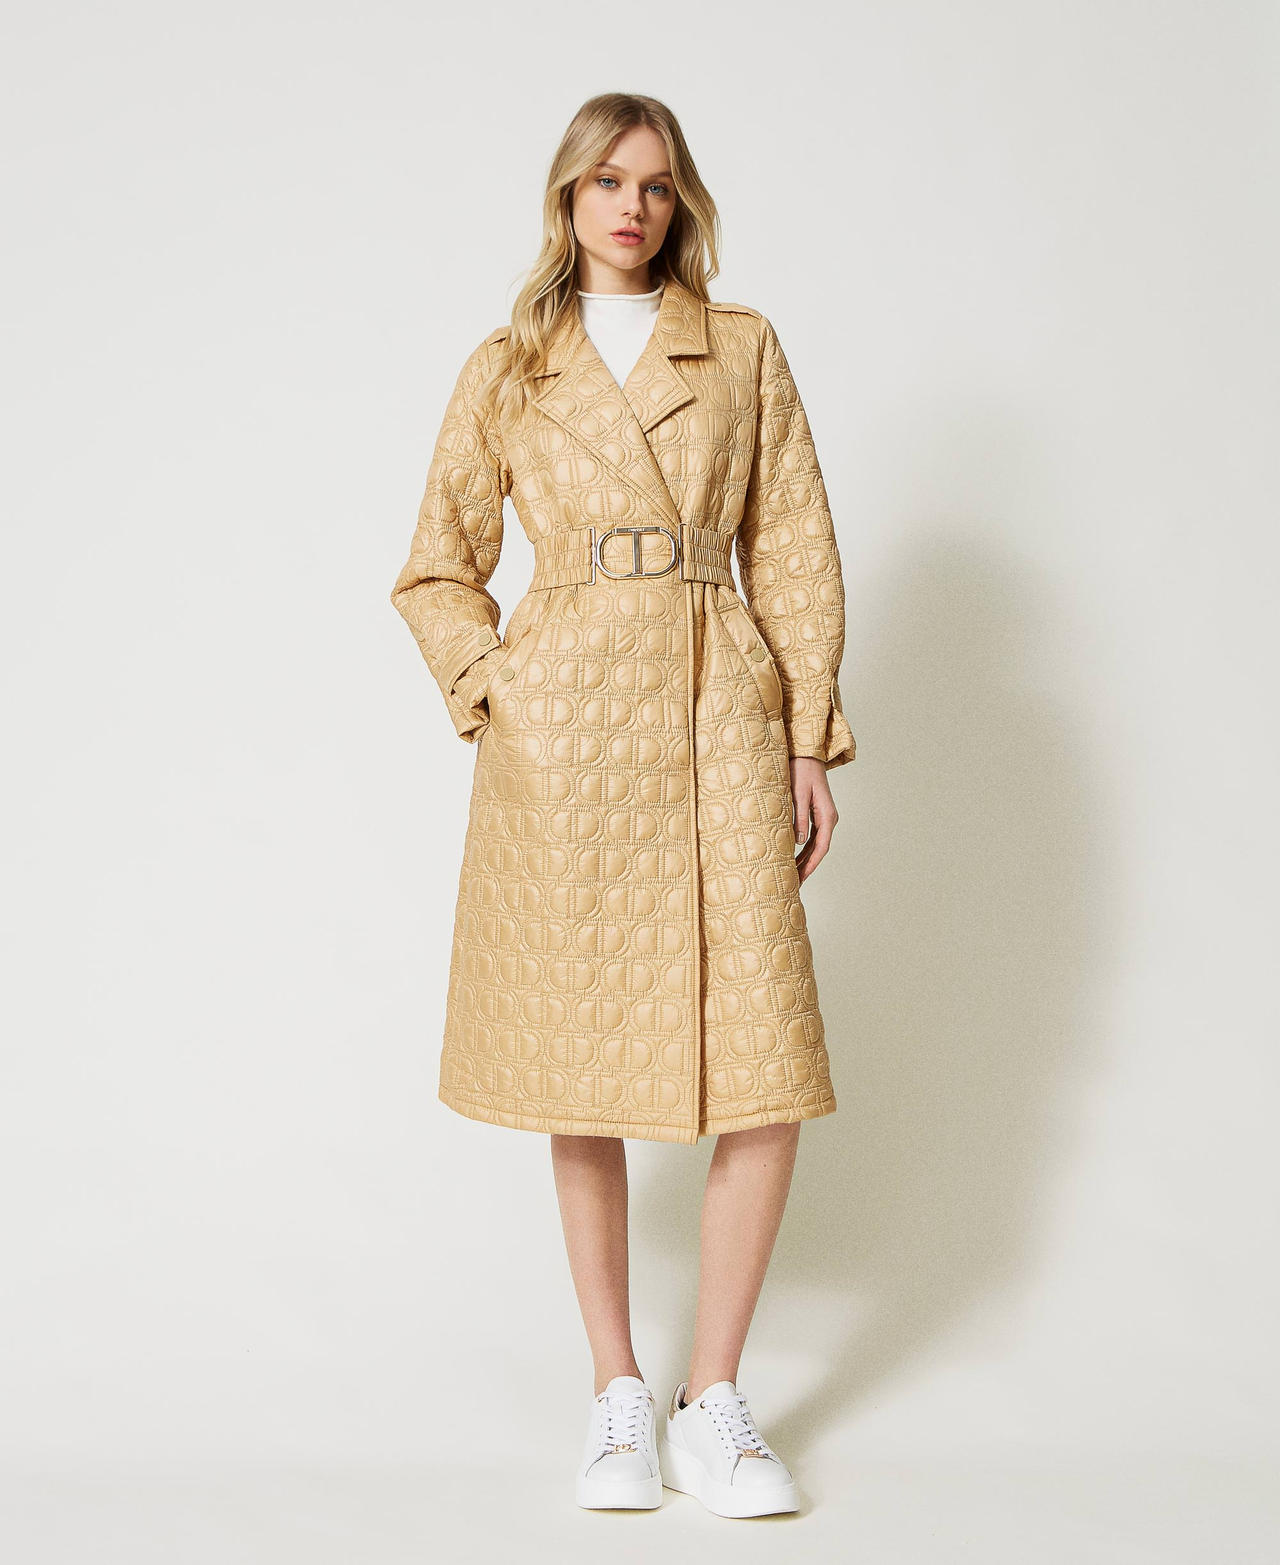 Louis Vuitton woman trench rain coat SIZE 40 LARGE